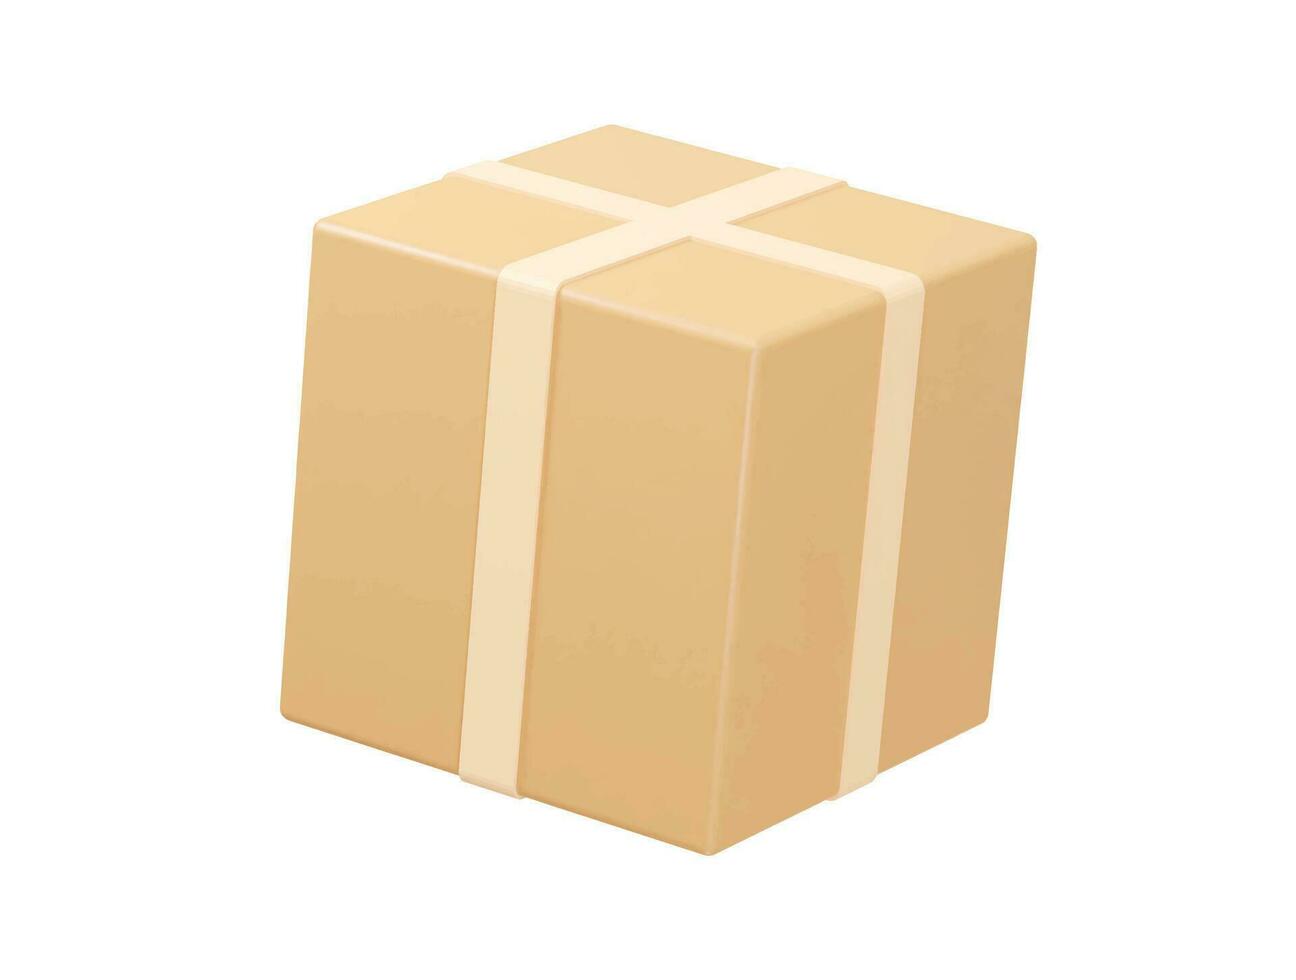 Cardboard box 3d rendering icon vector